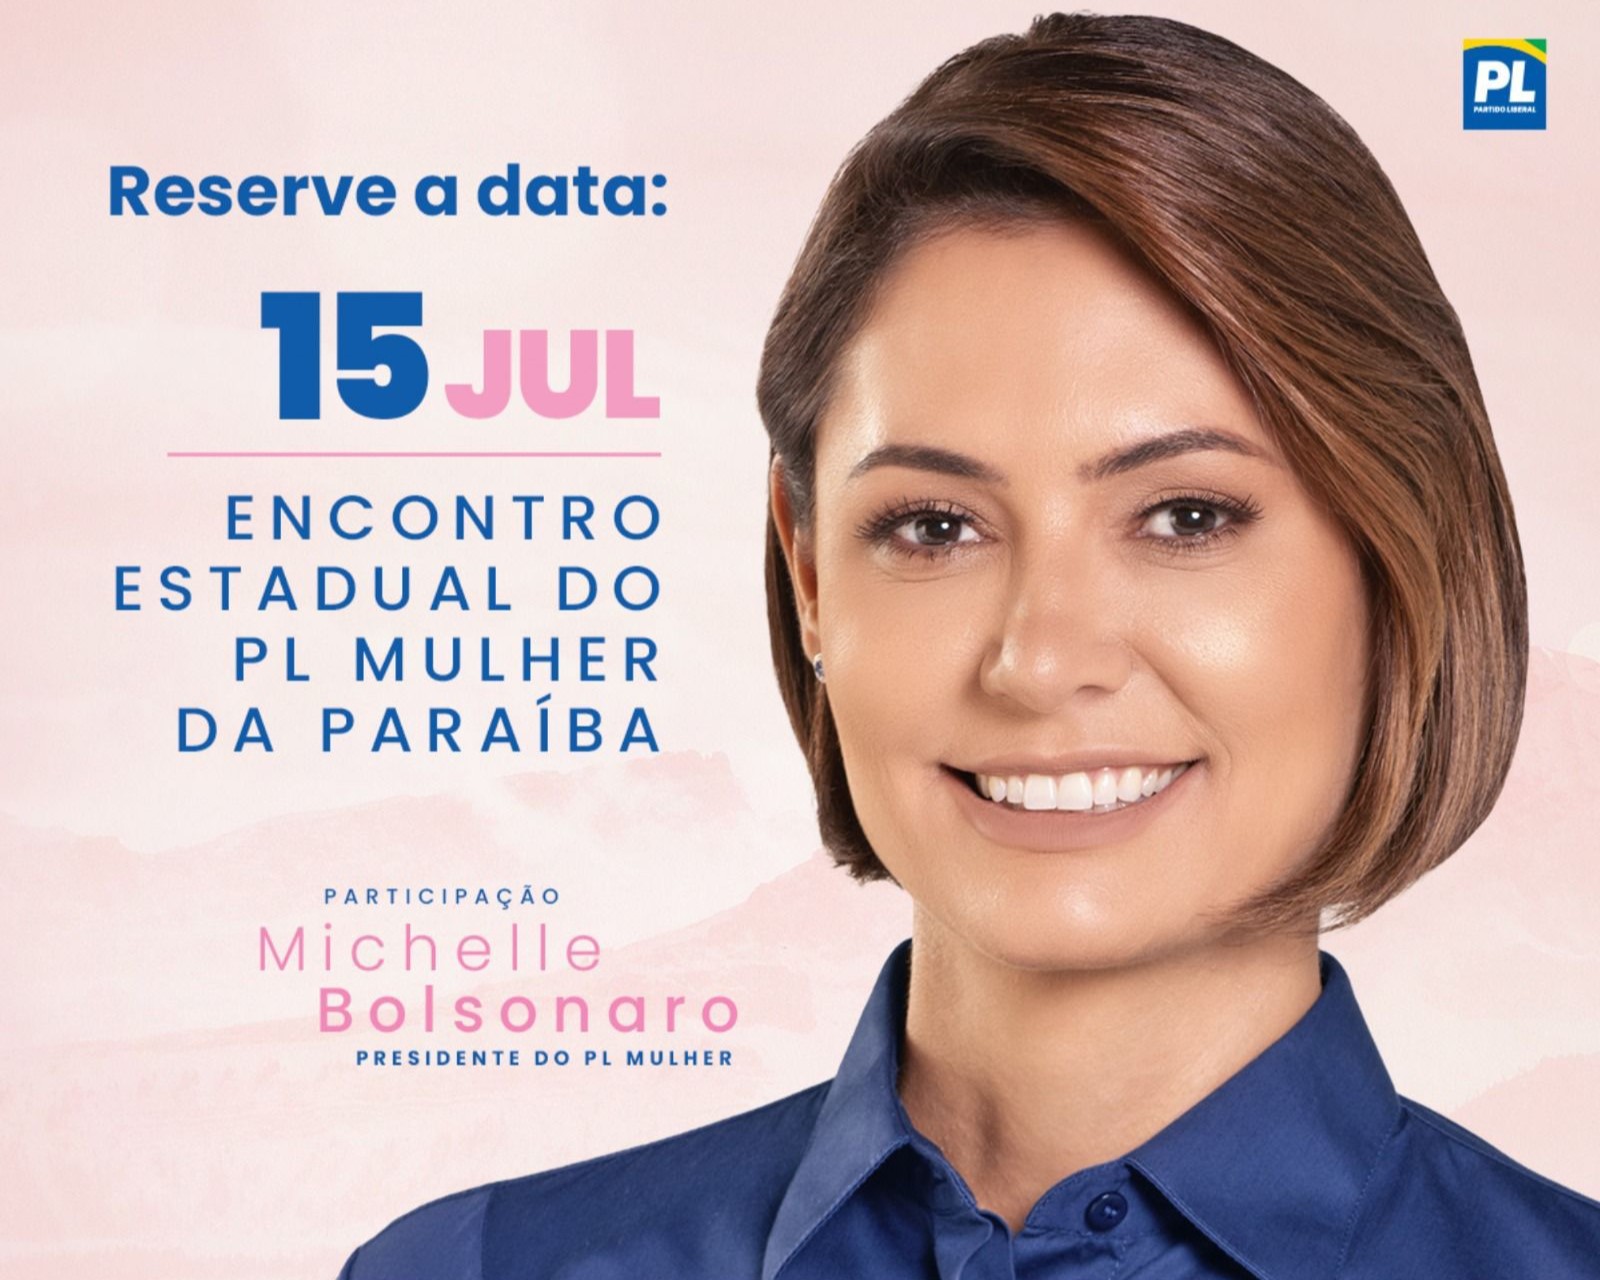 Hellen Paloma - João Pessoa, Paraíba, Brasil, Perfil profissional